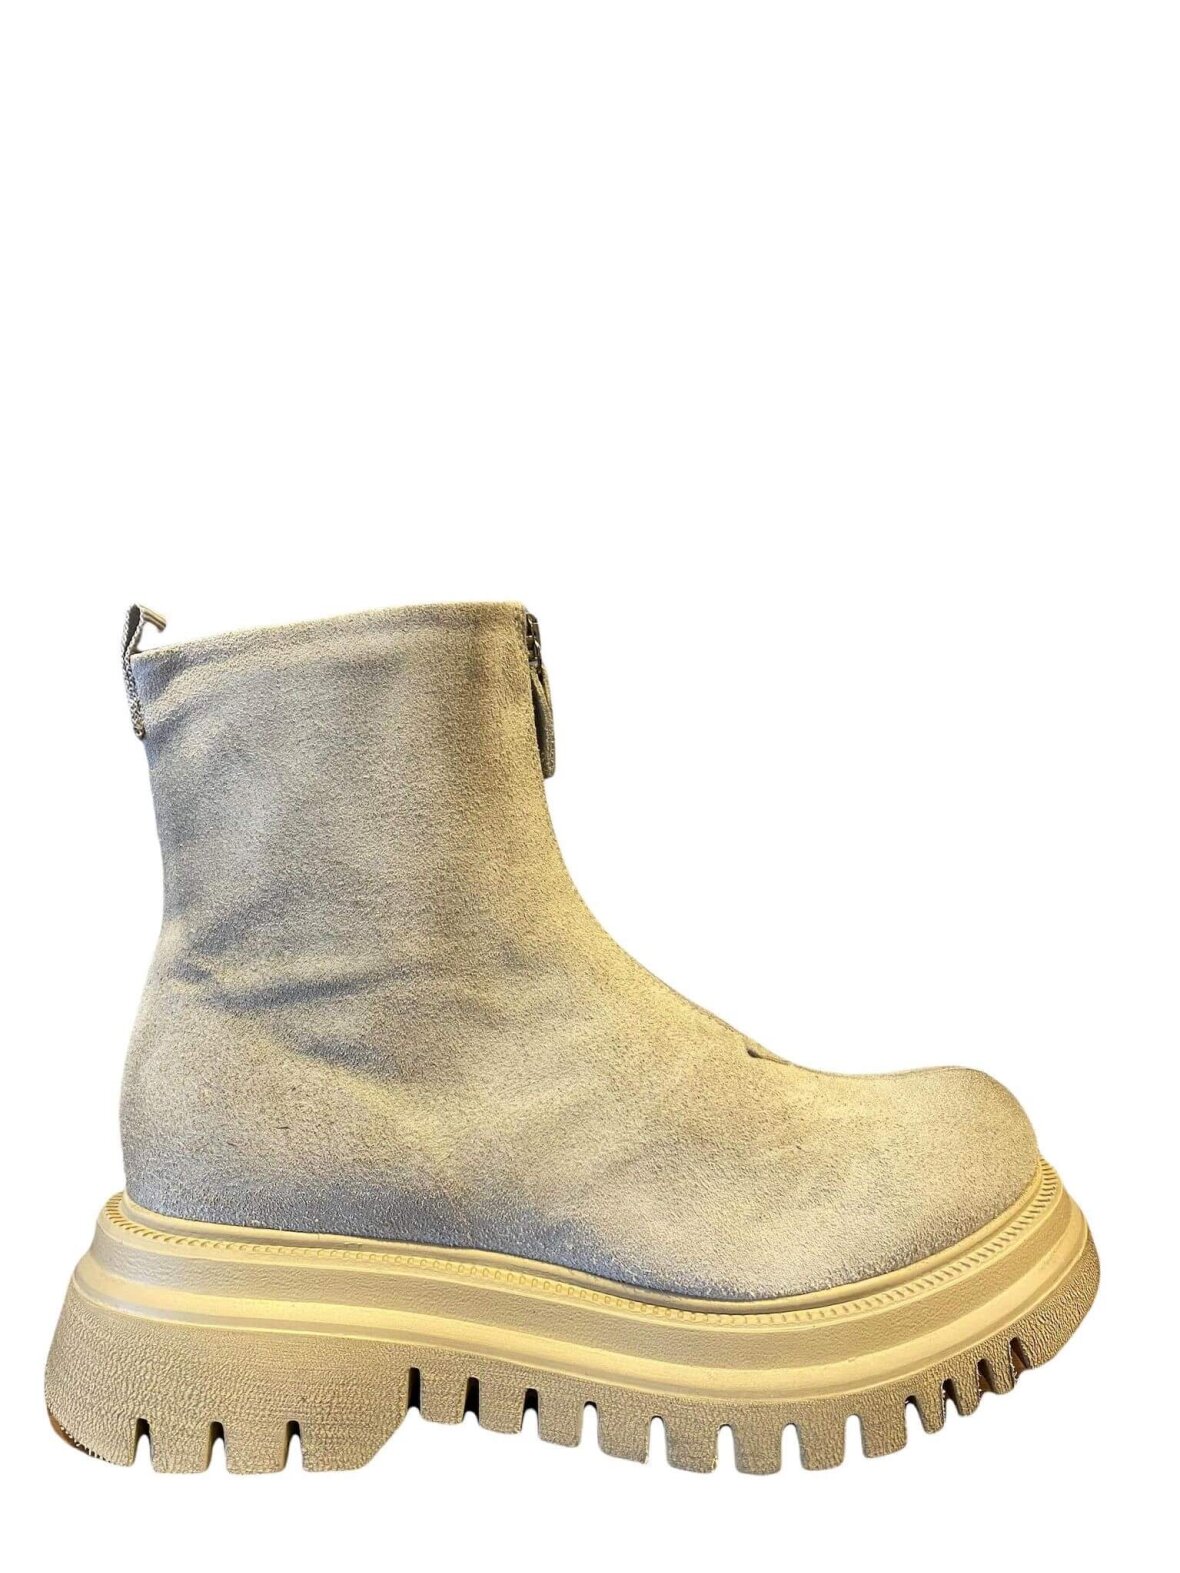 Korte støvler fra Lofina i London Sand farvet ruskind kan købes Helle M i Ve